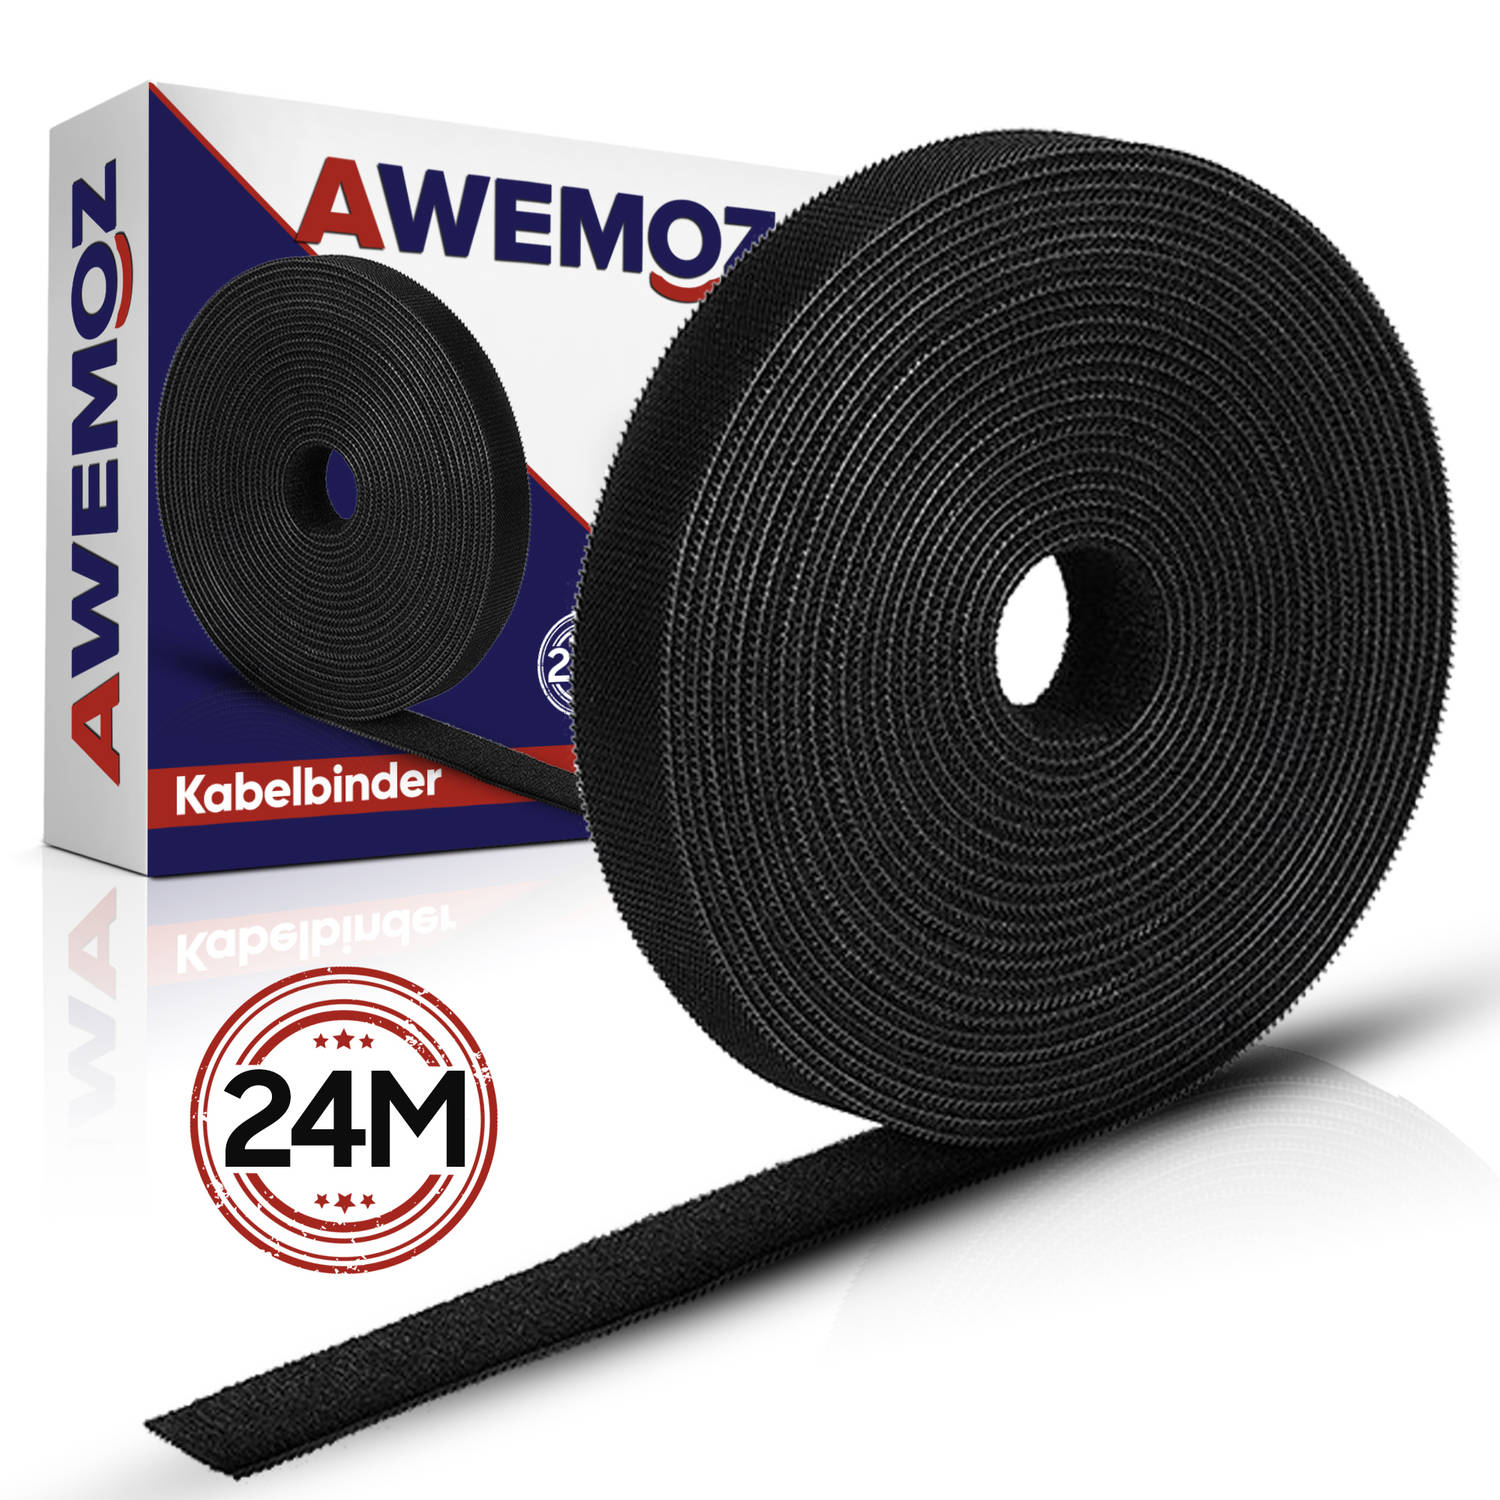 AWEMOZ Velcro Kabelbinders 24 Meter Lang - Kabelsbinders Klittenband - Zwarte Kabel Organiser - Kabel management - Cable Organizer